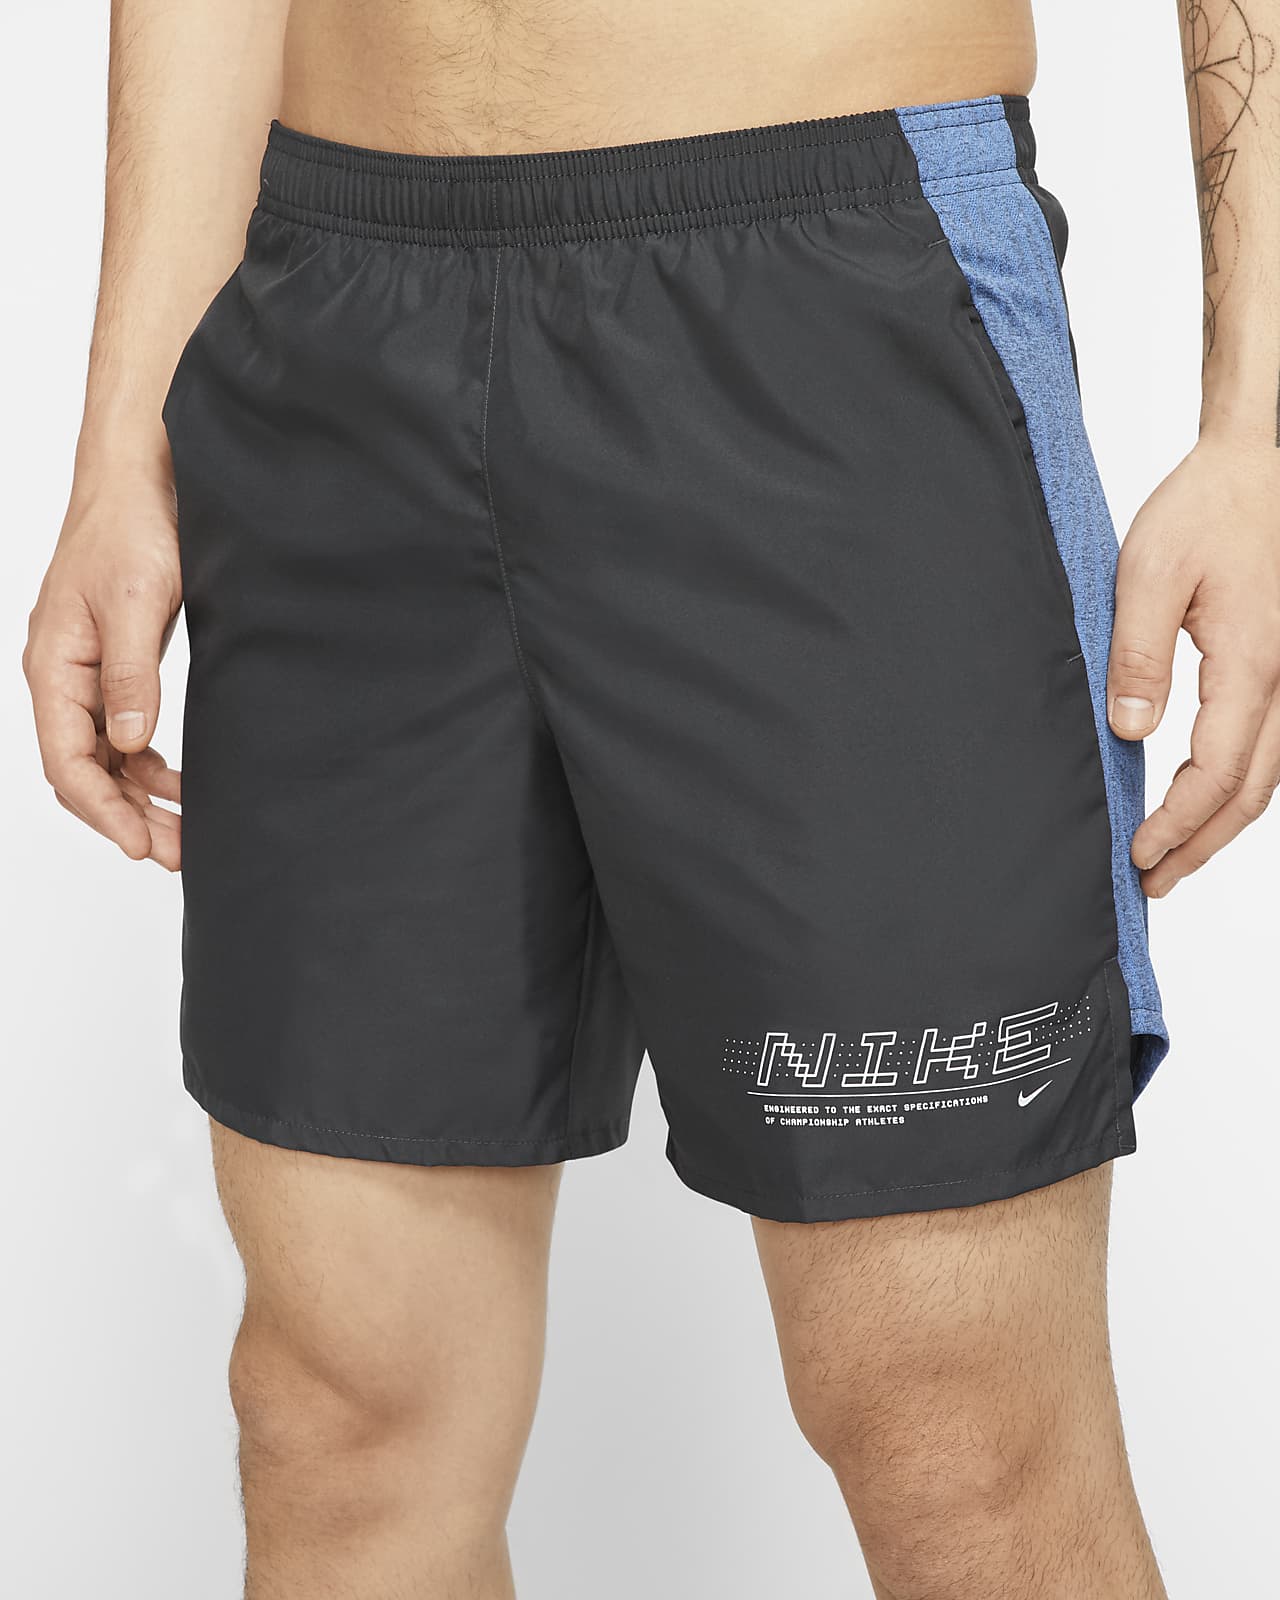 nike running challenger shorts in black